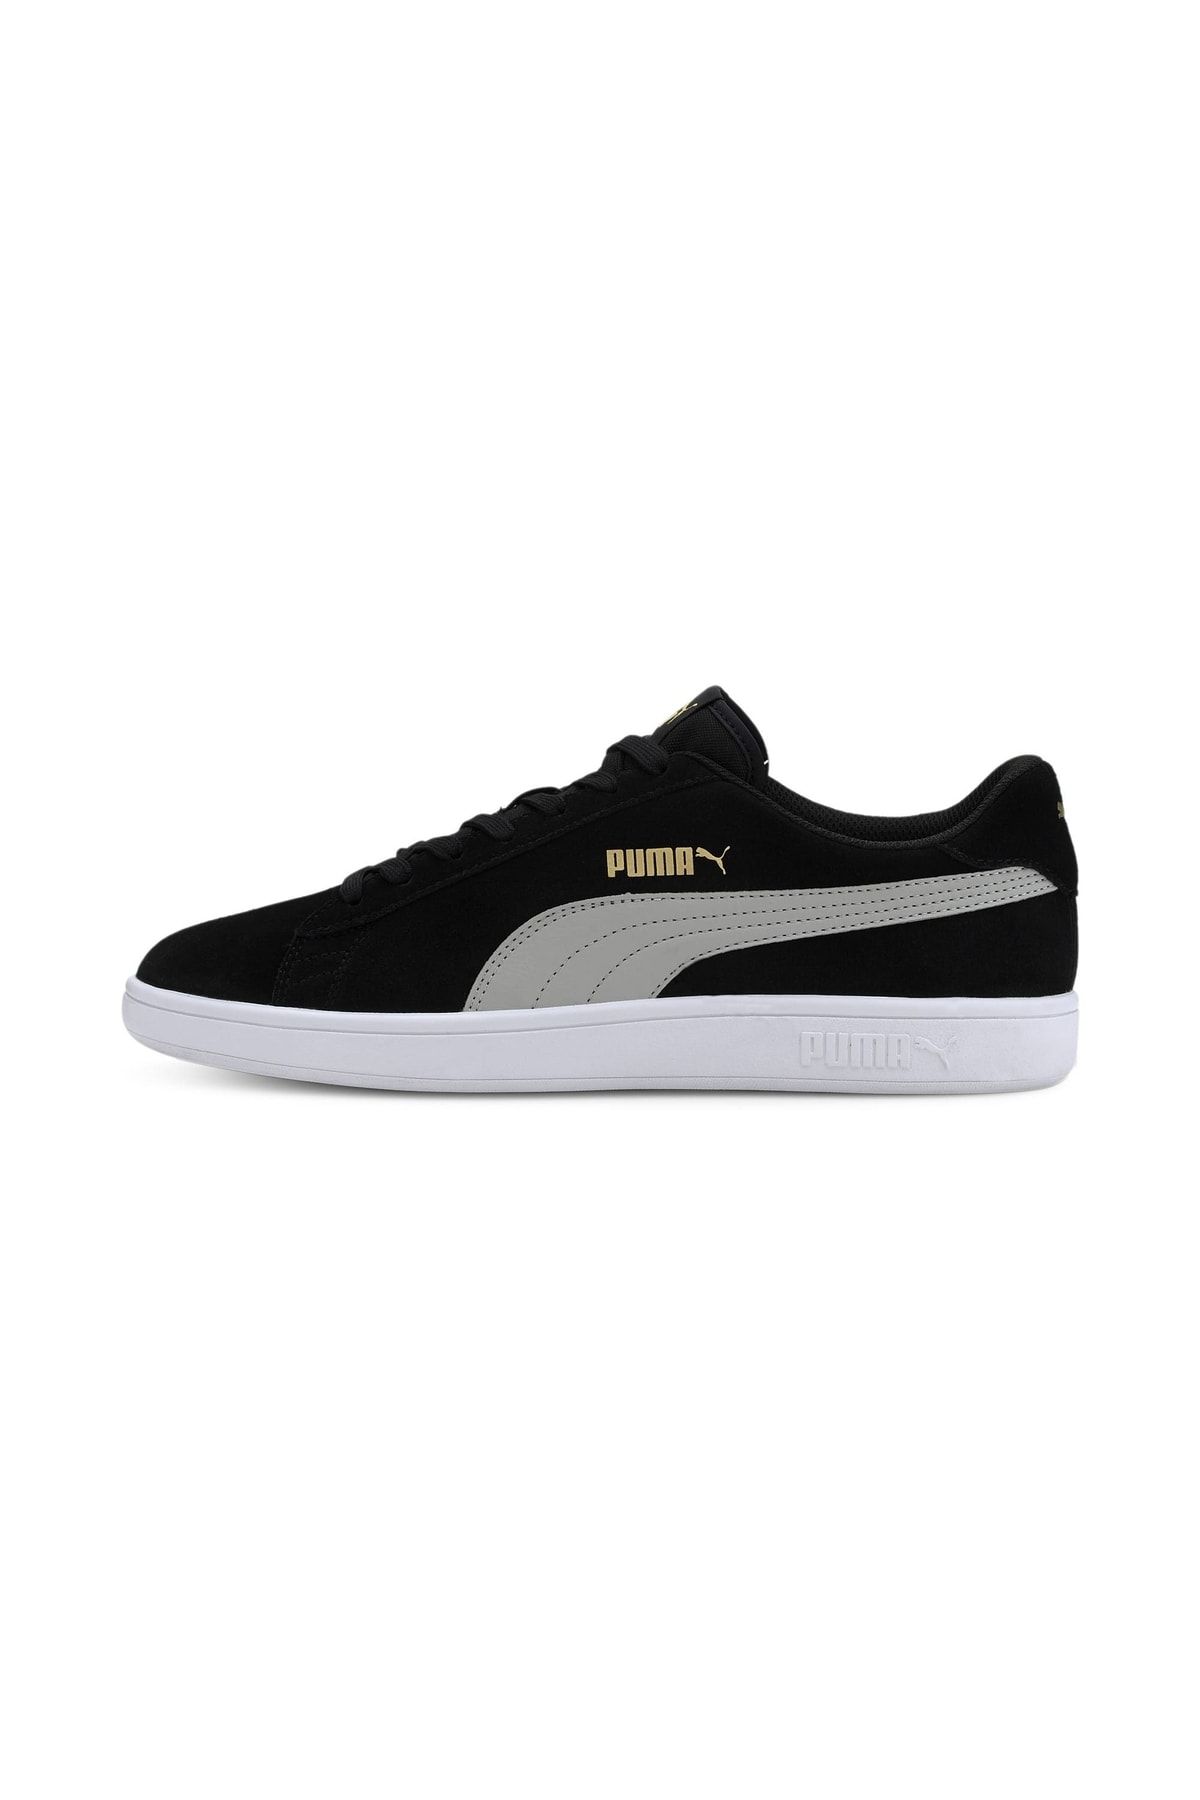 Puma SMASH V2 Siyah Erkek Sneaker Ayakkabı 101119210